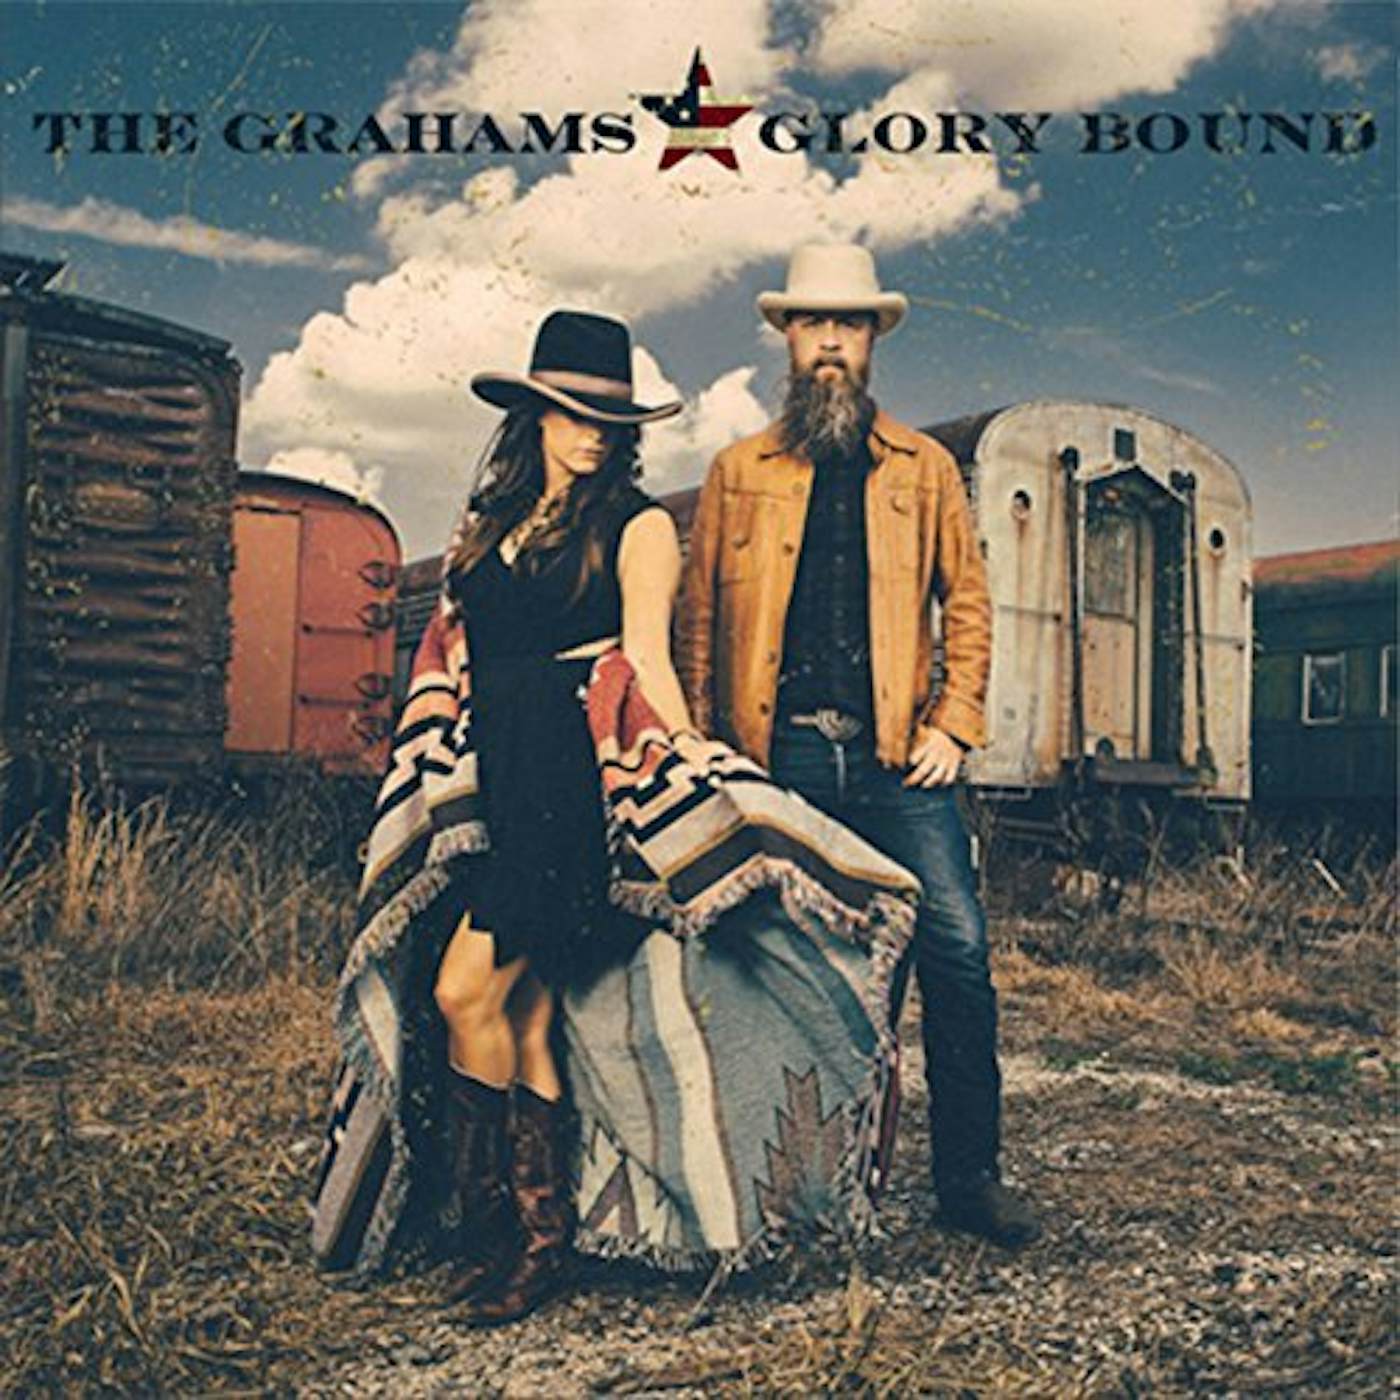 The Grahams GLORYBOUND CD